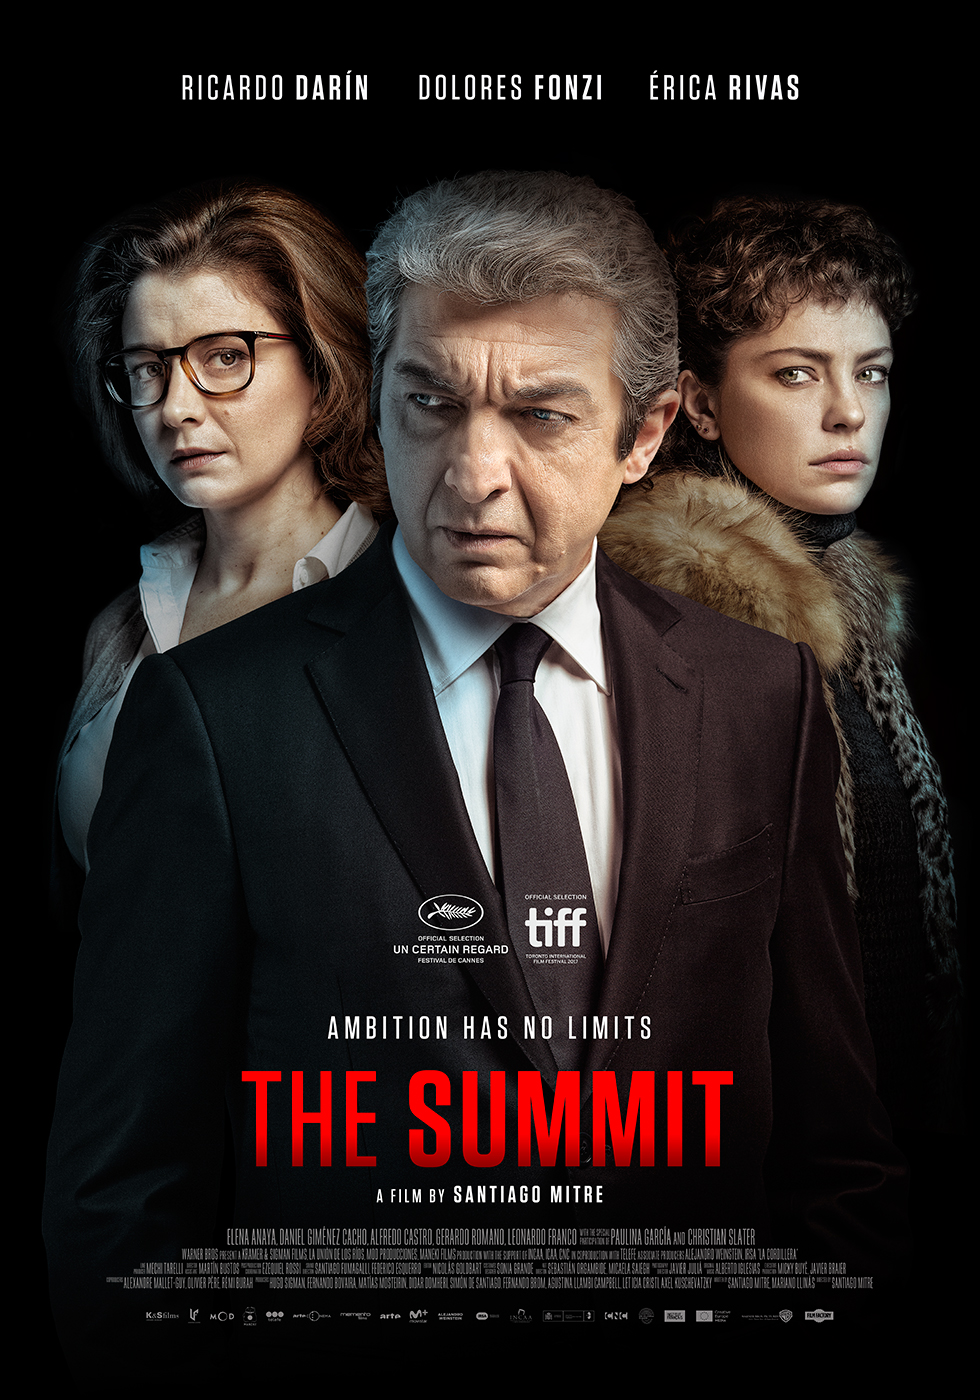 Nonton film The Summit layarkaca21 indoxx1 ganool online streaming terbaru